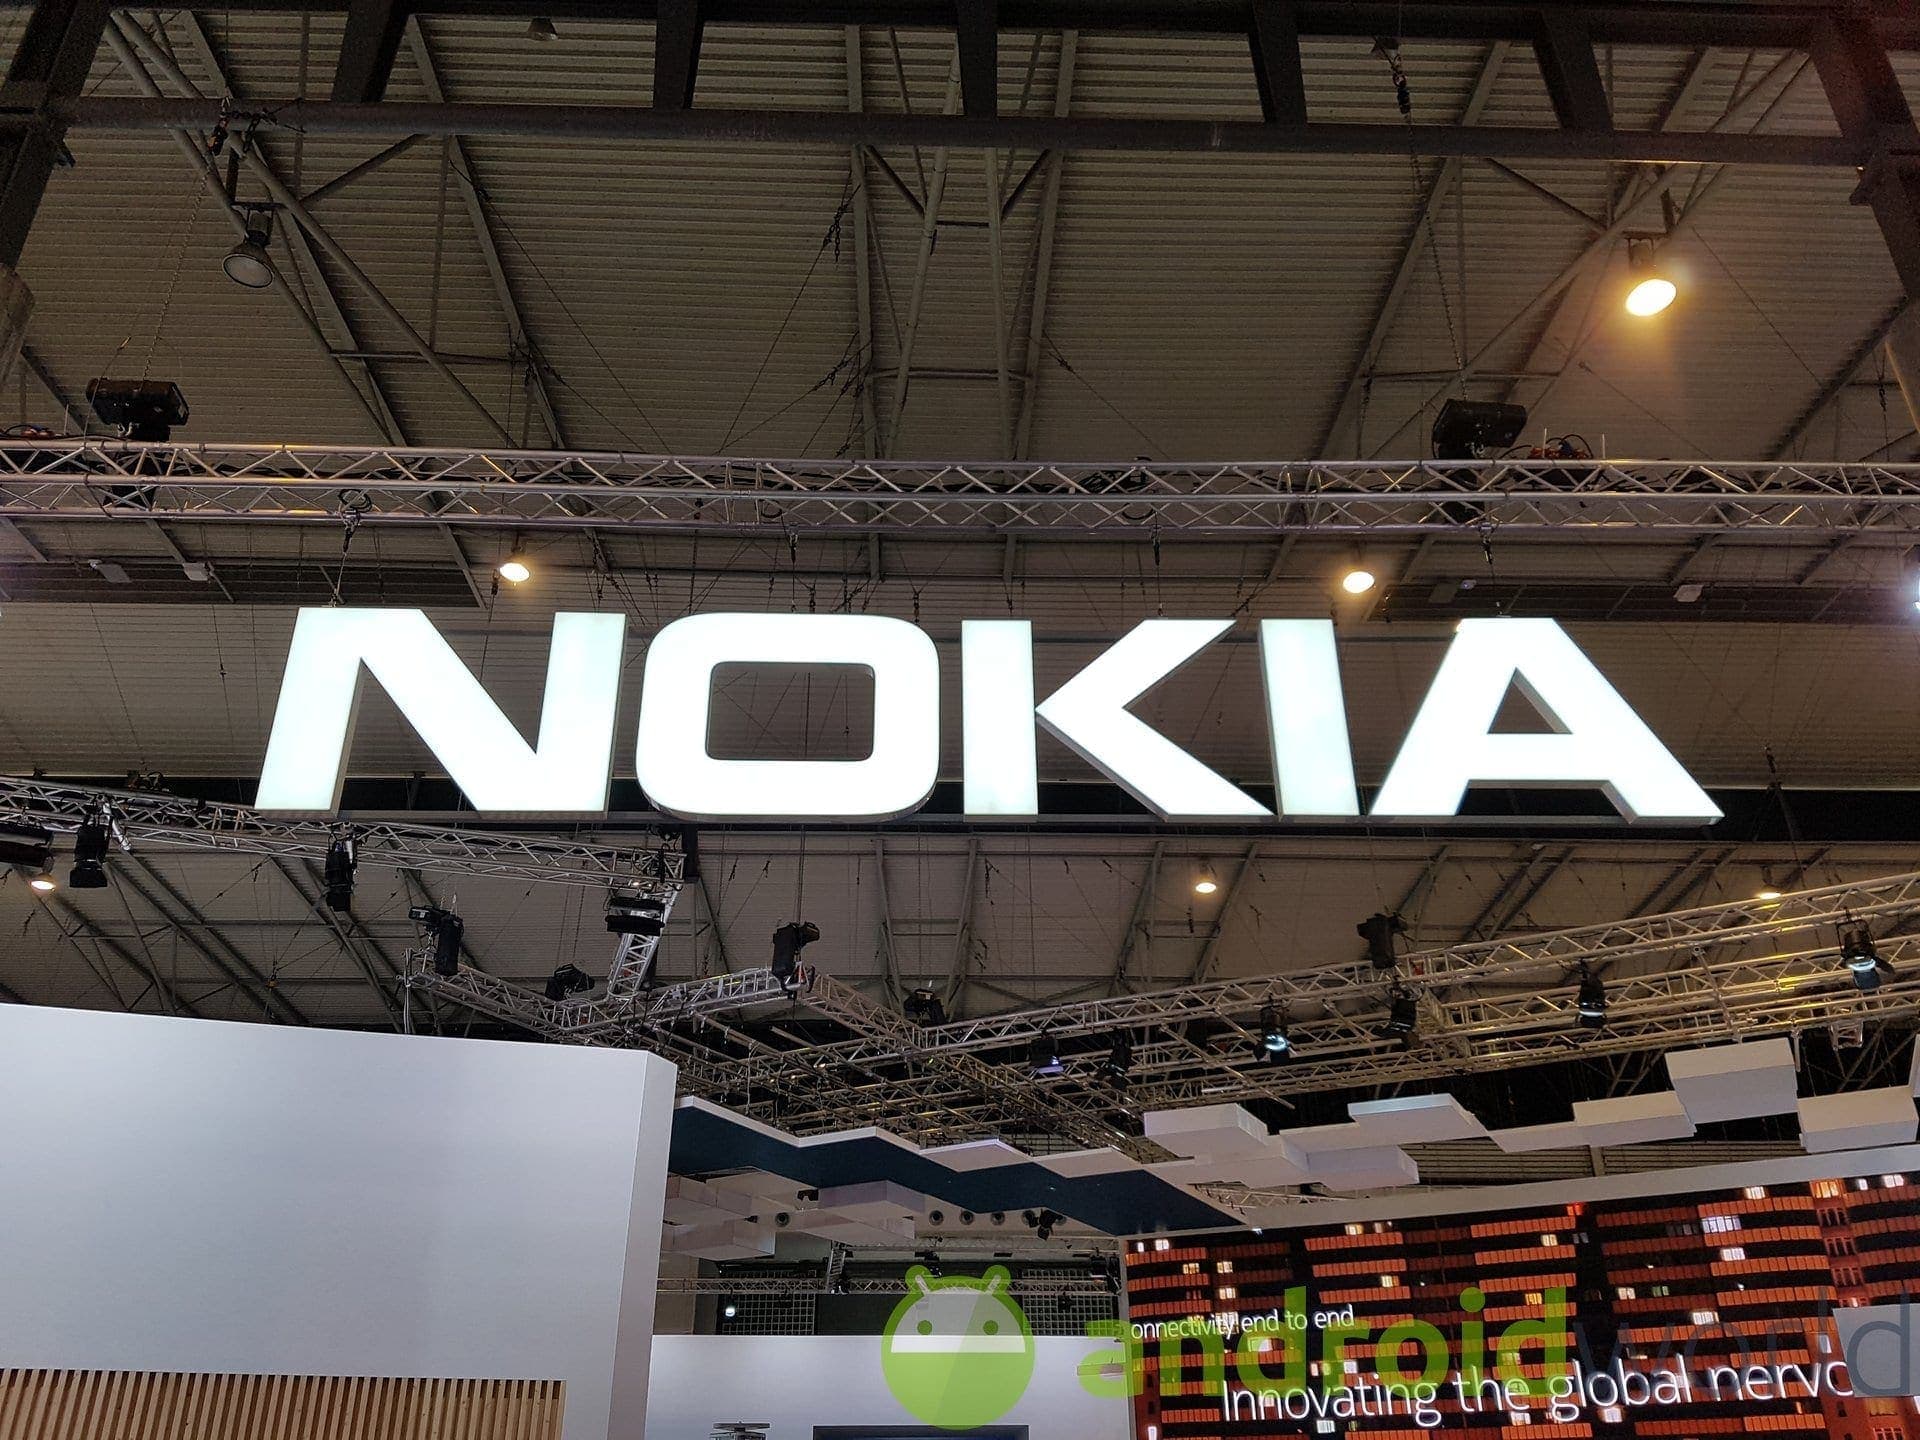 Non sperate più in un top di gamma Nokia